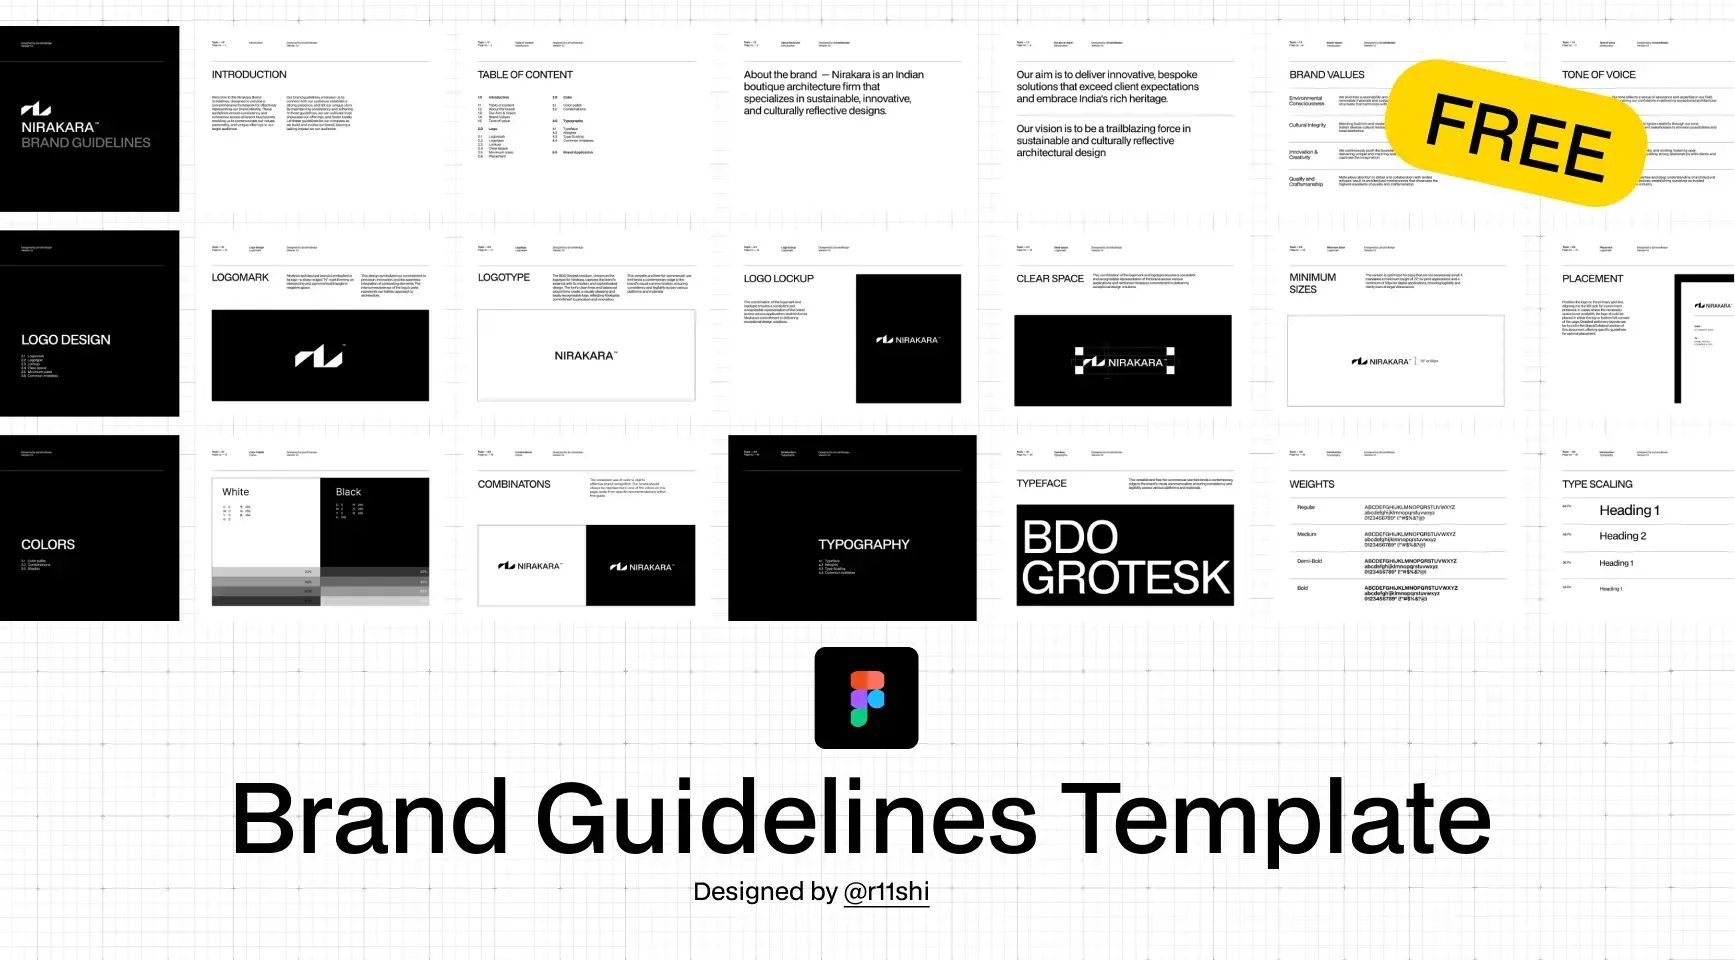 Blogduwebdesign ressources templates brand guidelines template